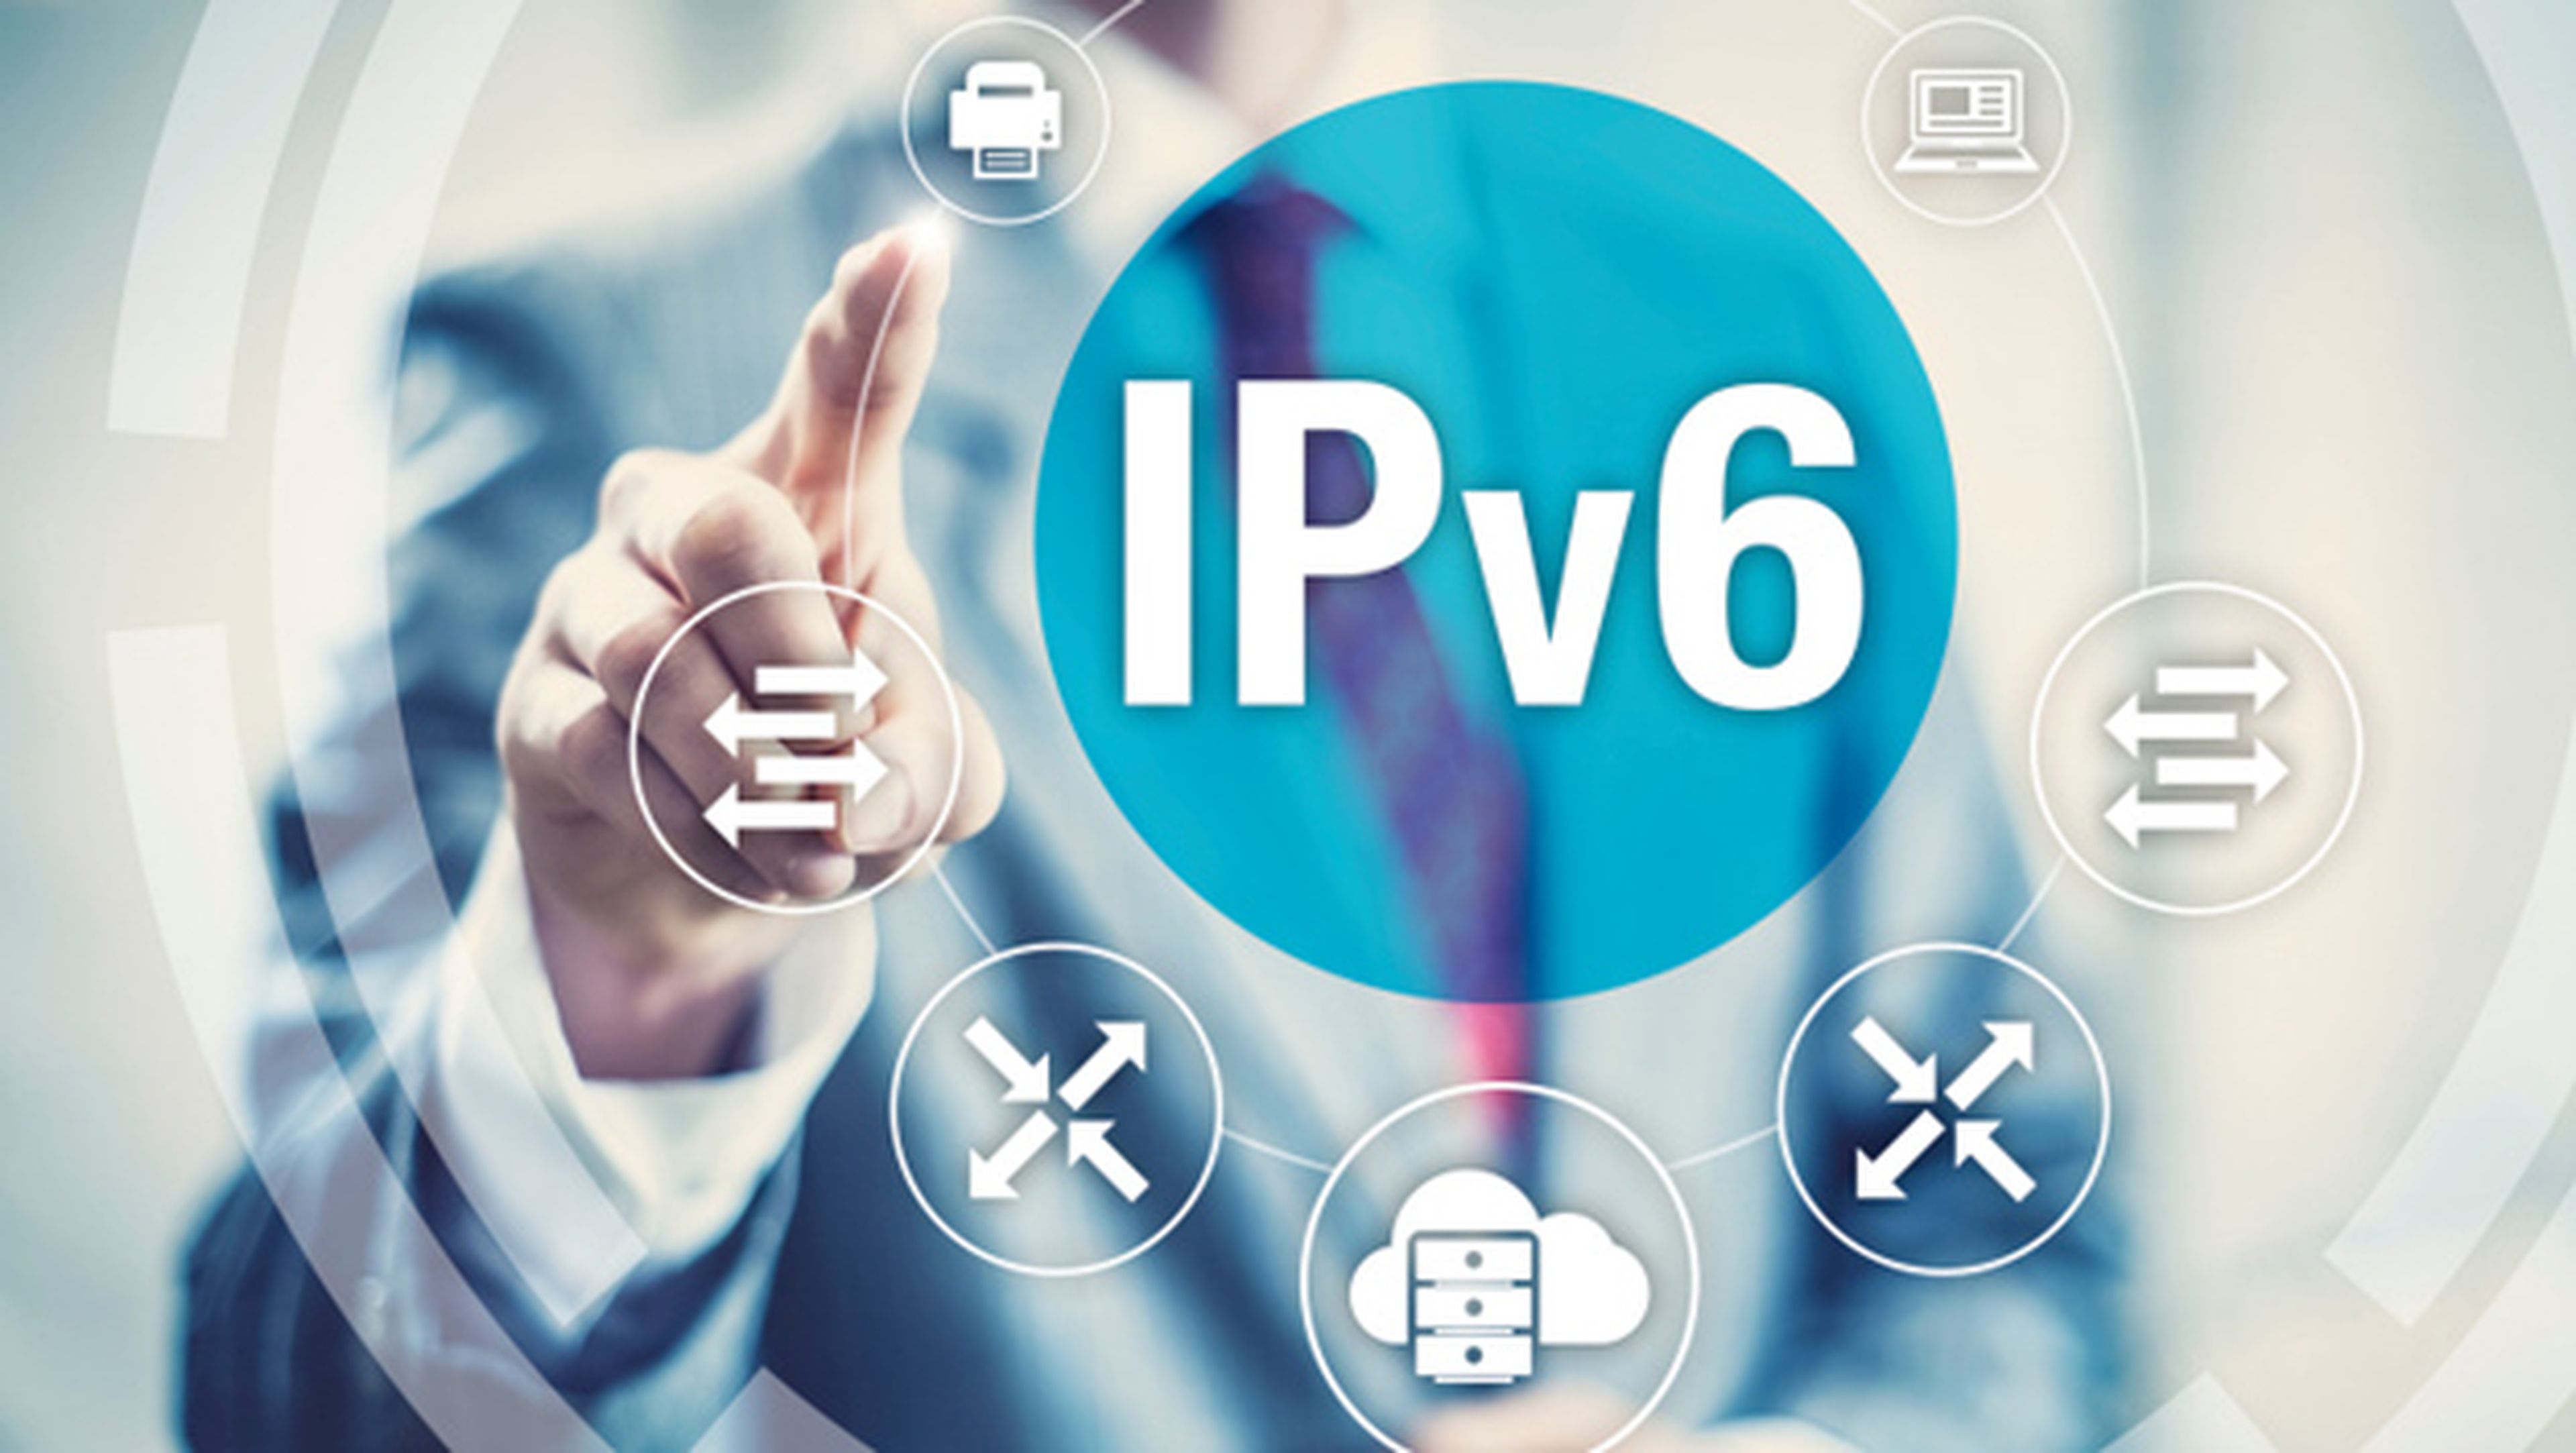 ipv6 definition, ipv6 connection, ipv6 protocol, ipv6 explanation